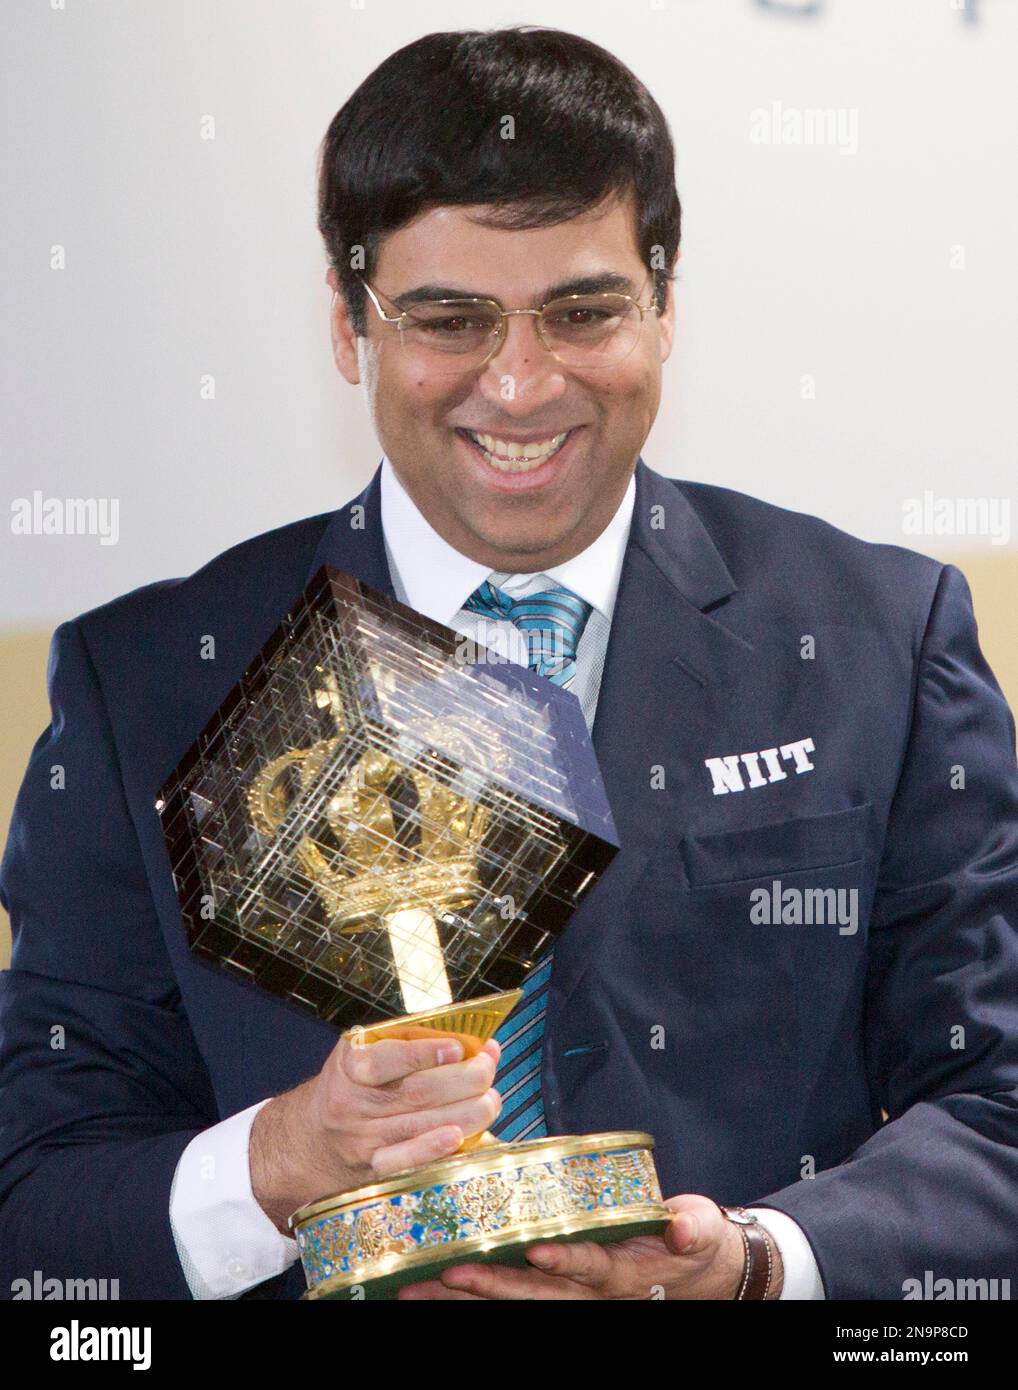 Hey, just 'checking' on you: Chess champion Vishwanathan Anand has